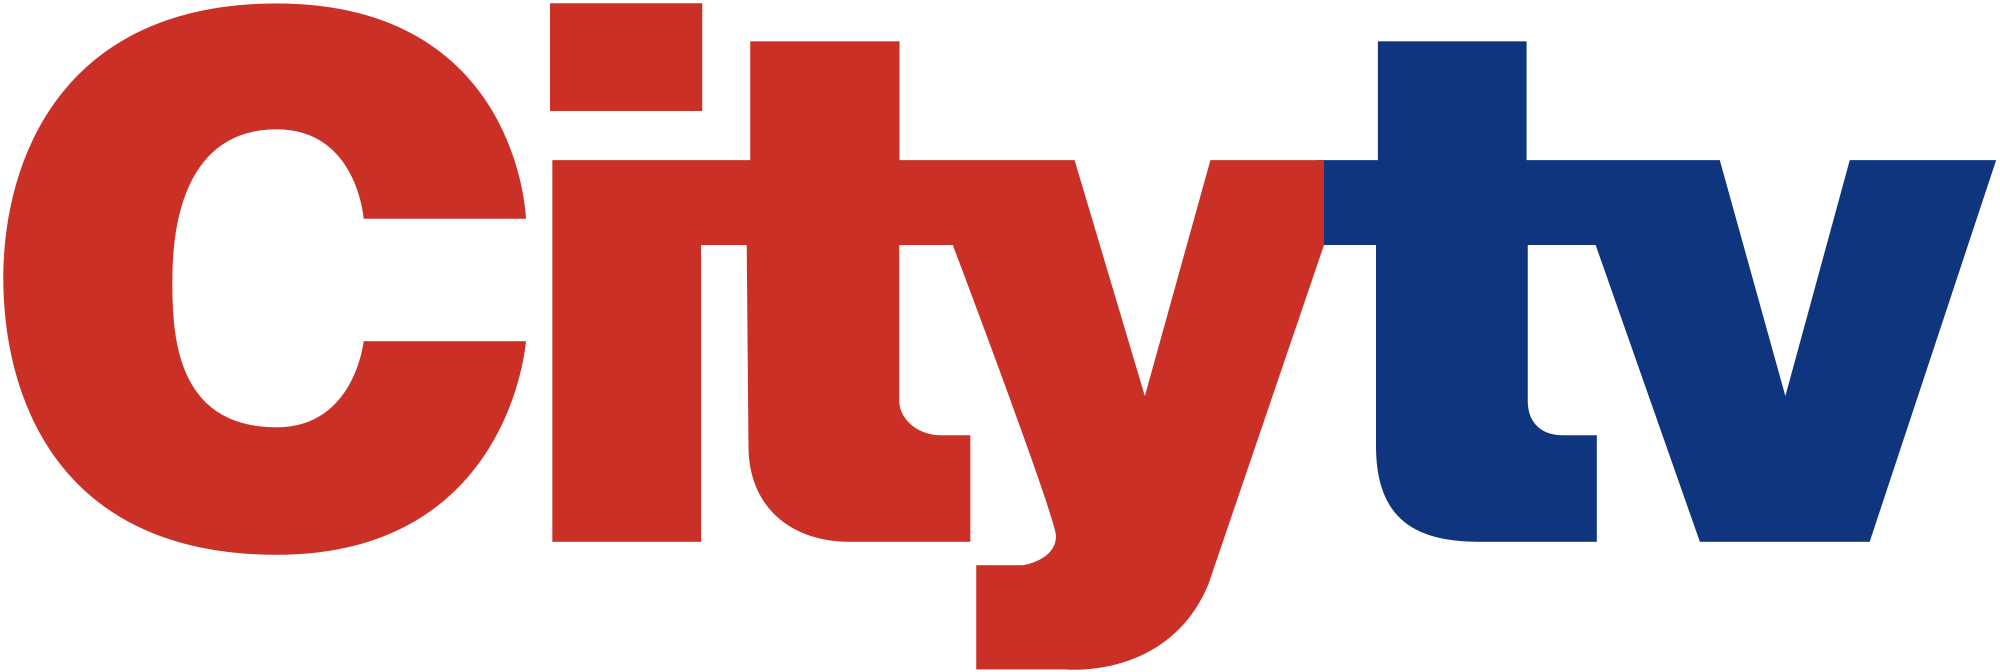 Open - City Tv Logo (2000x672), Png Download